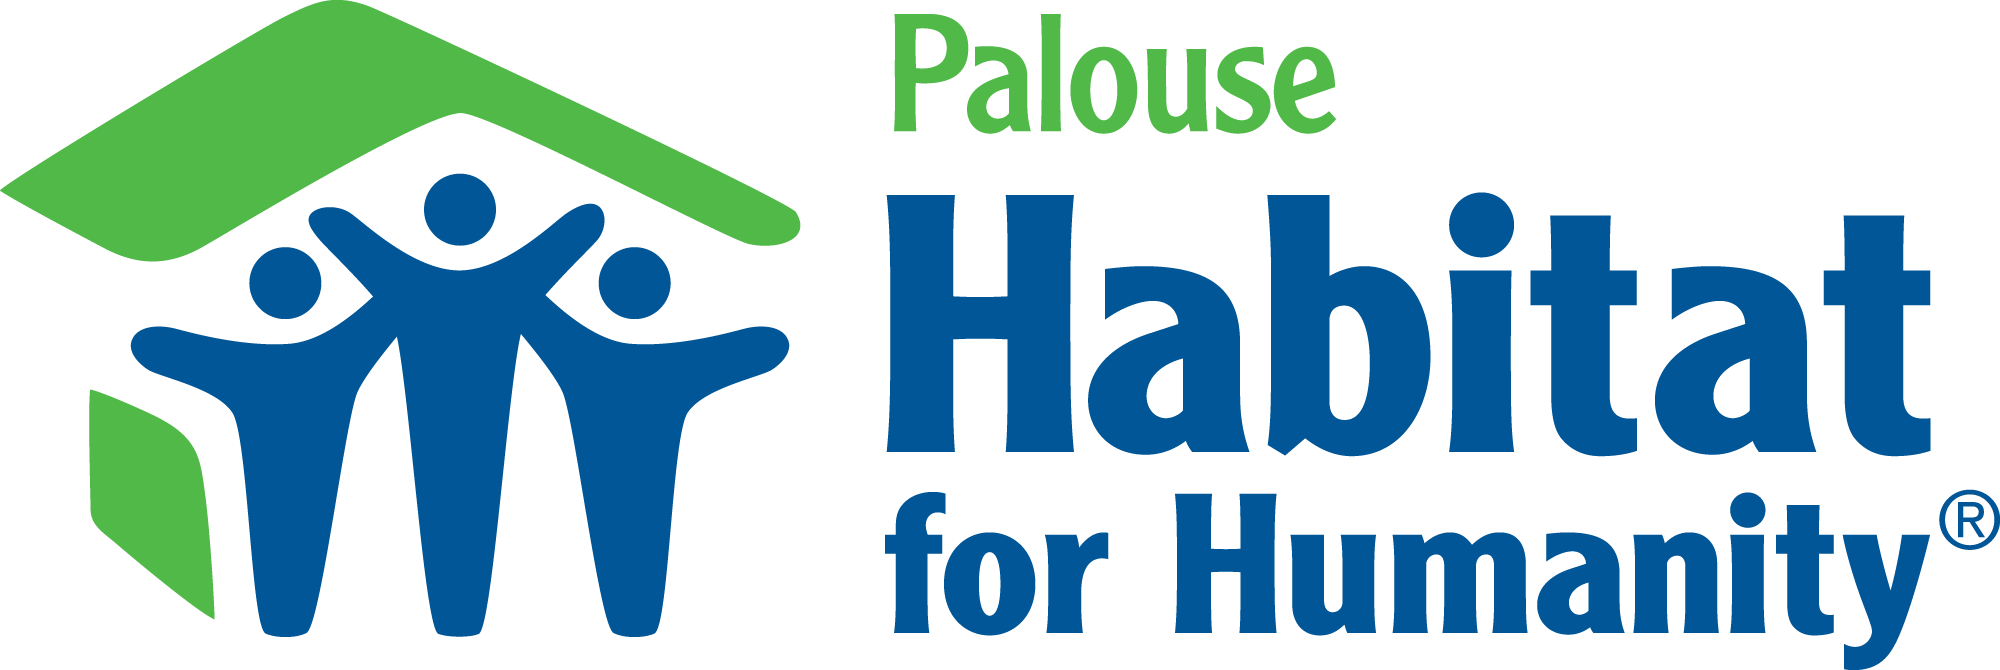 Palouse Habitat for Humanity, Inc.